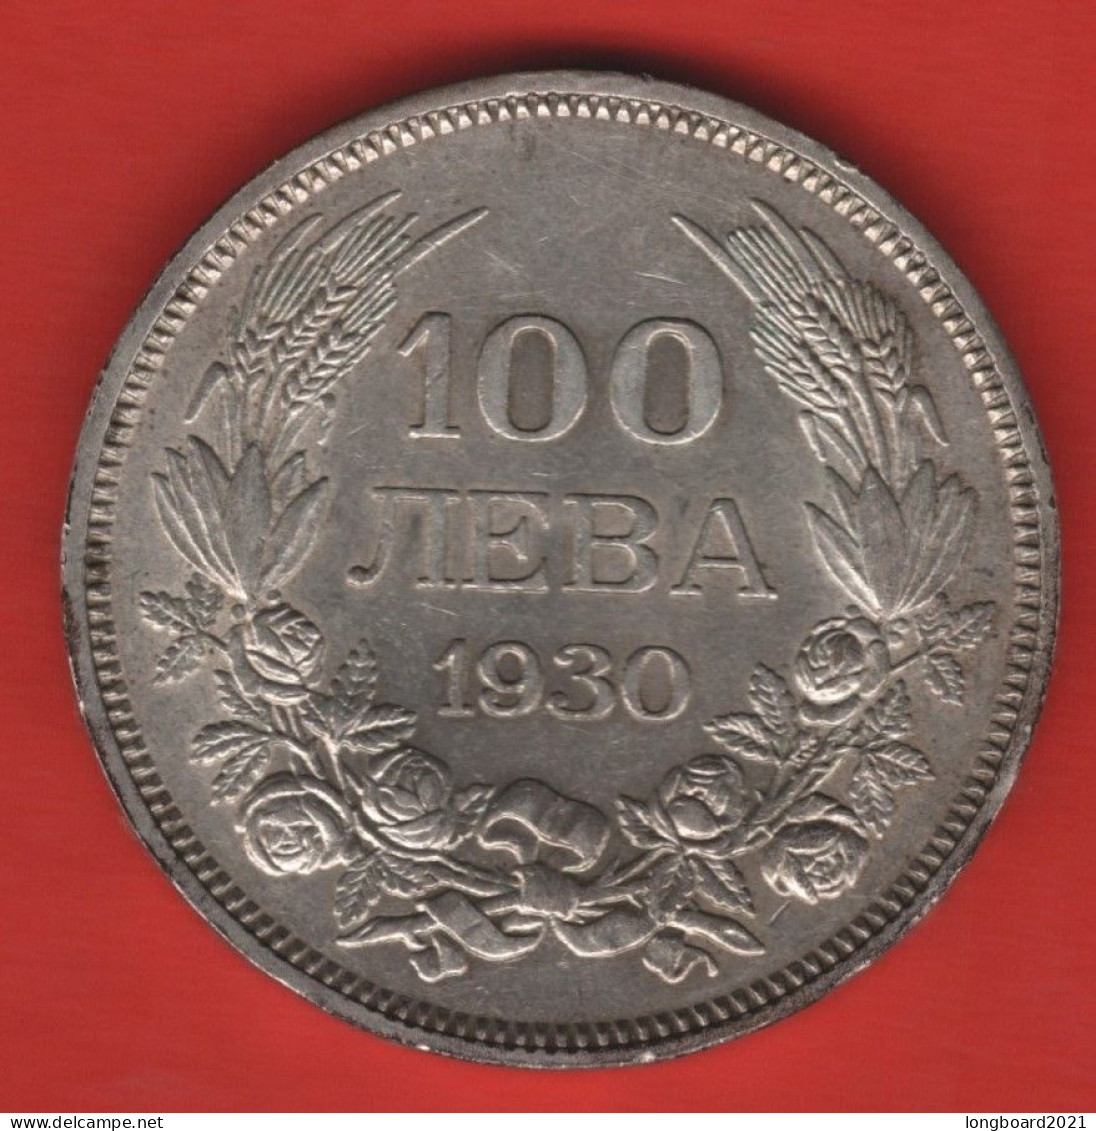 BULGARIA - 100 LEW 1930 -SILVER- - Bulgarije